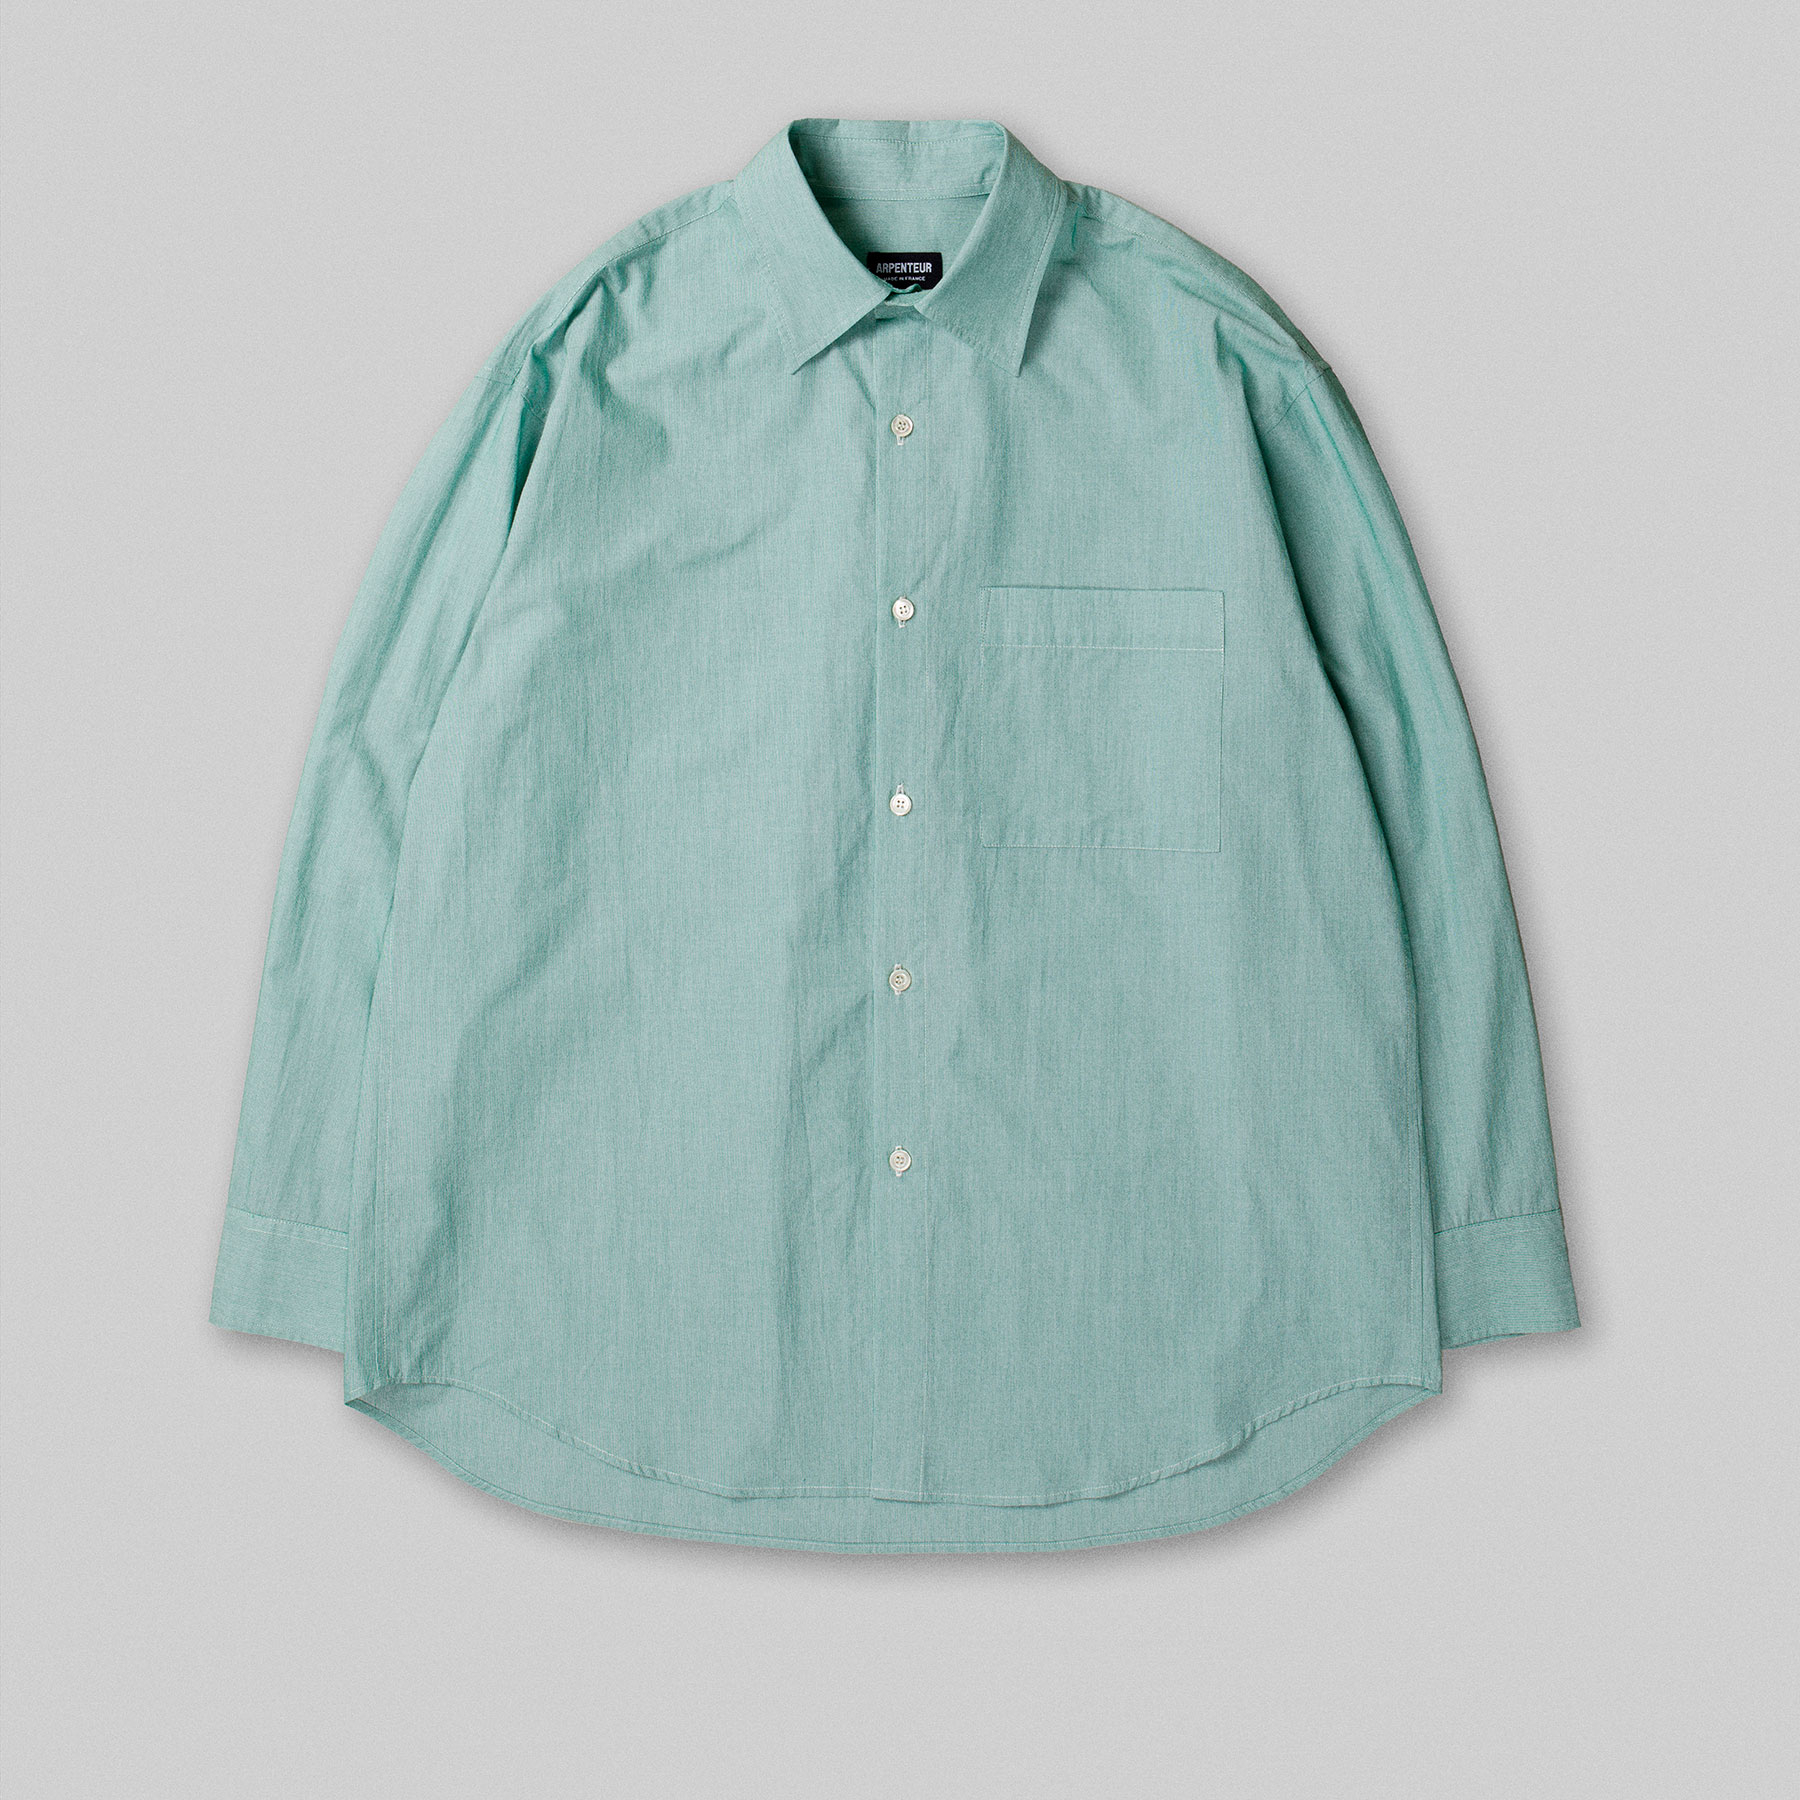 DORIS shirt by Arpenteur in Green color